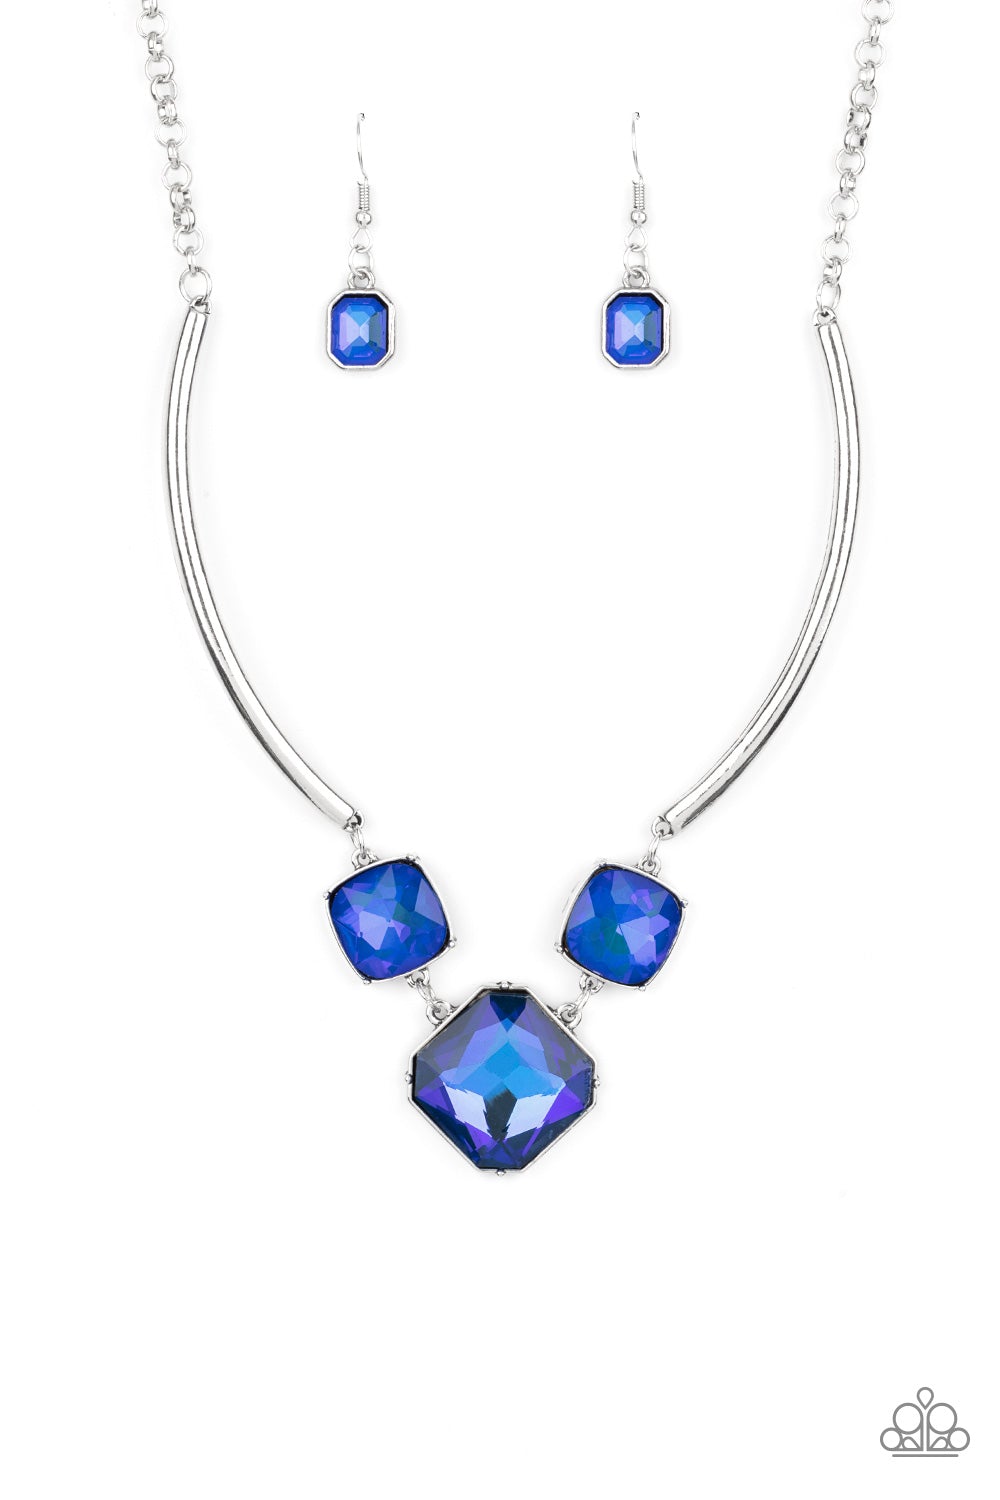 Divine IRIDESCENCE - Blue Iridescent necklace